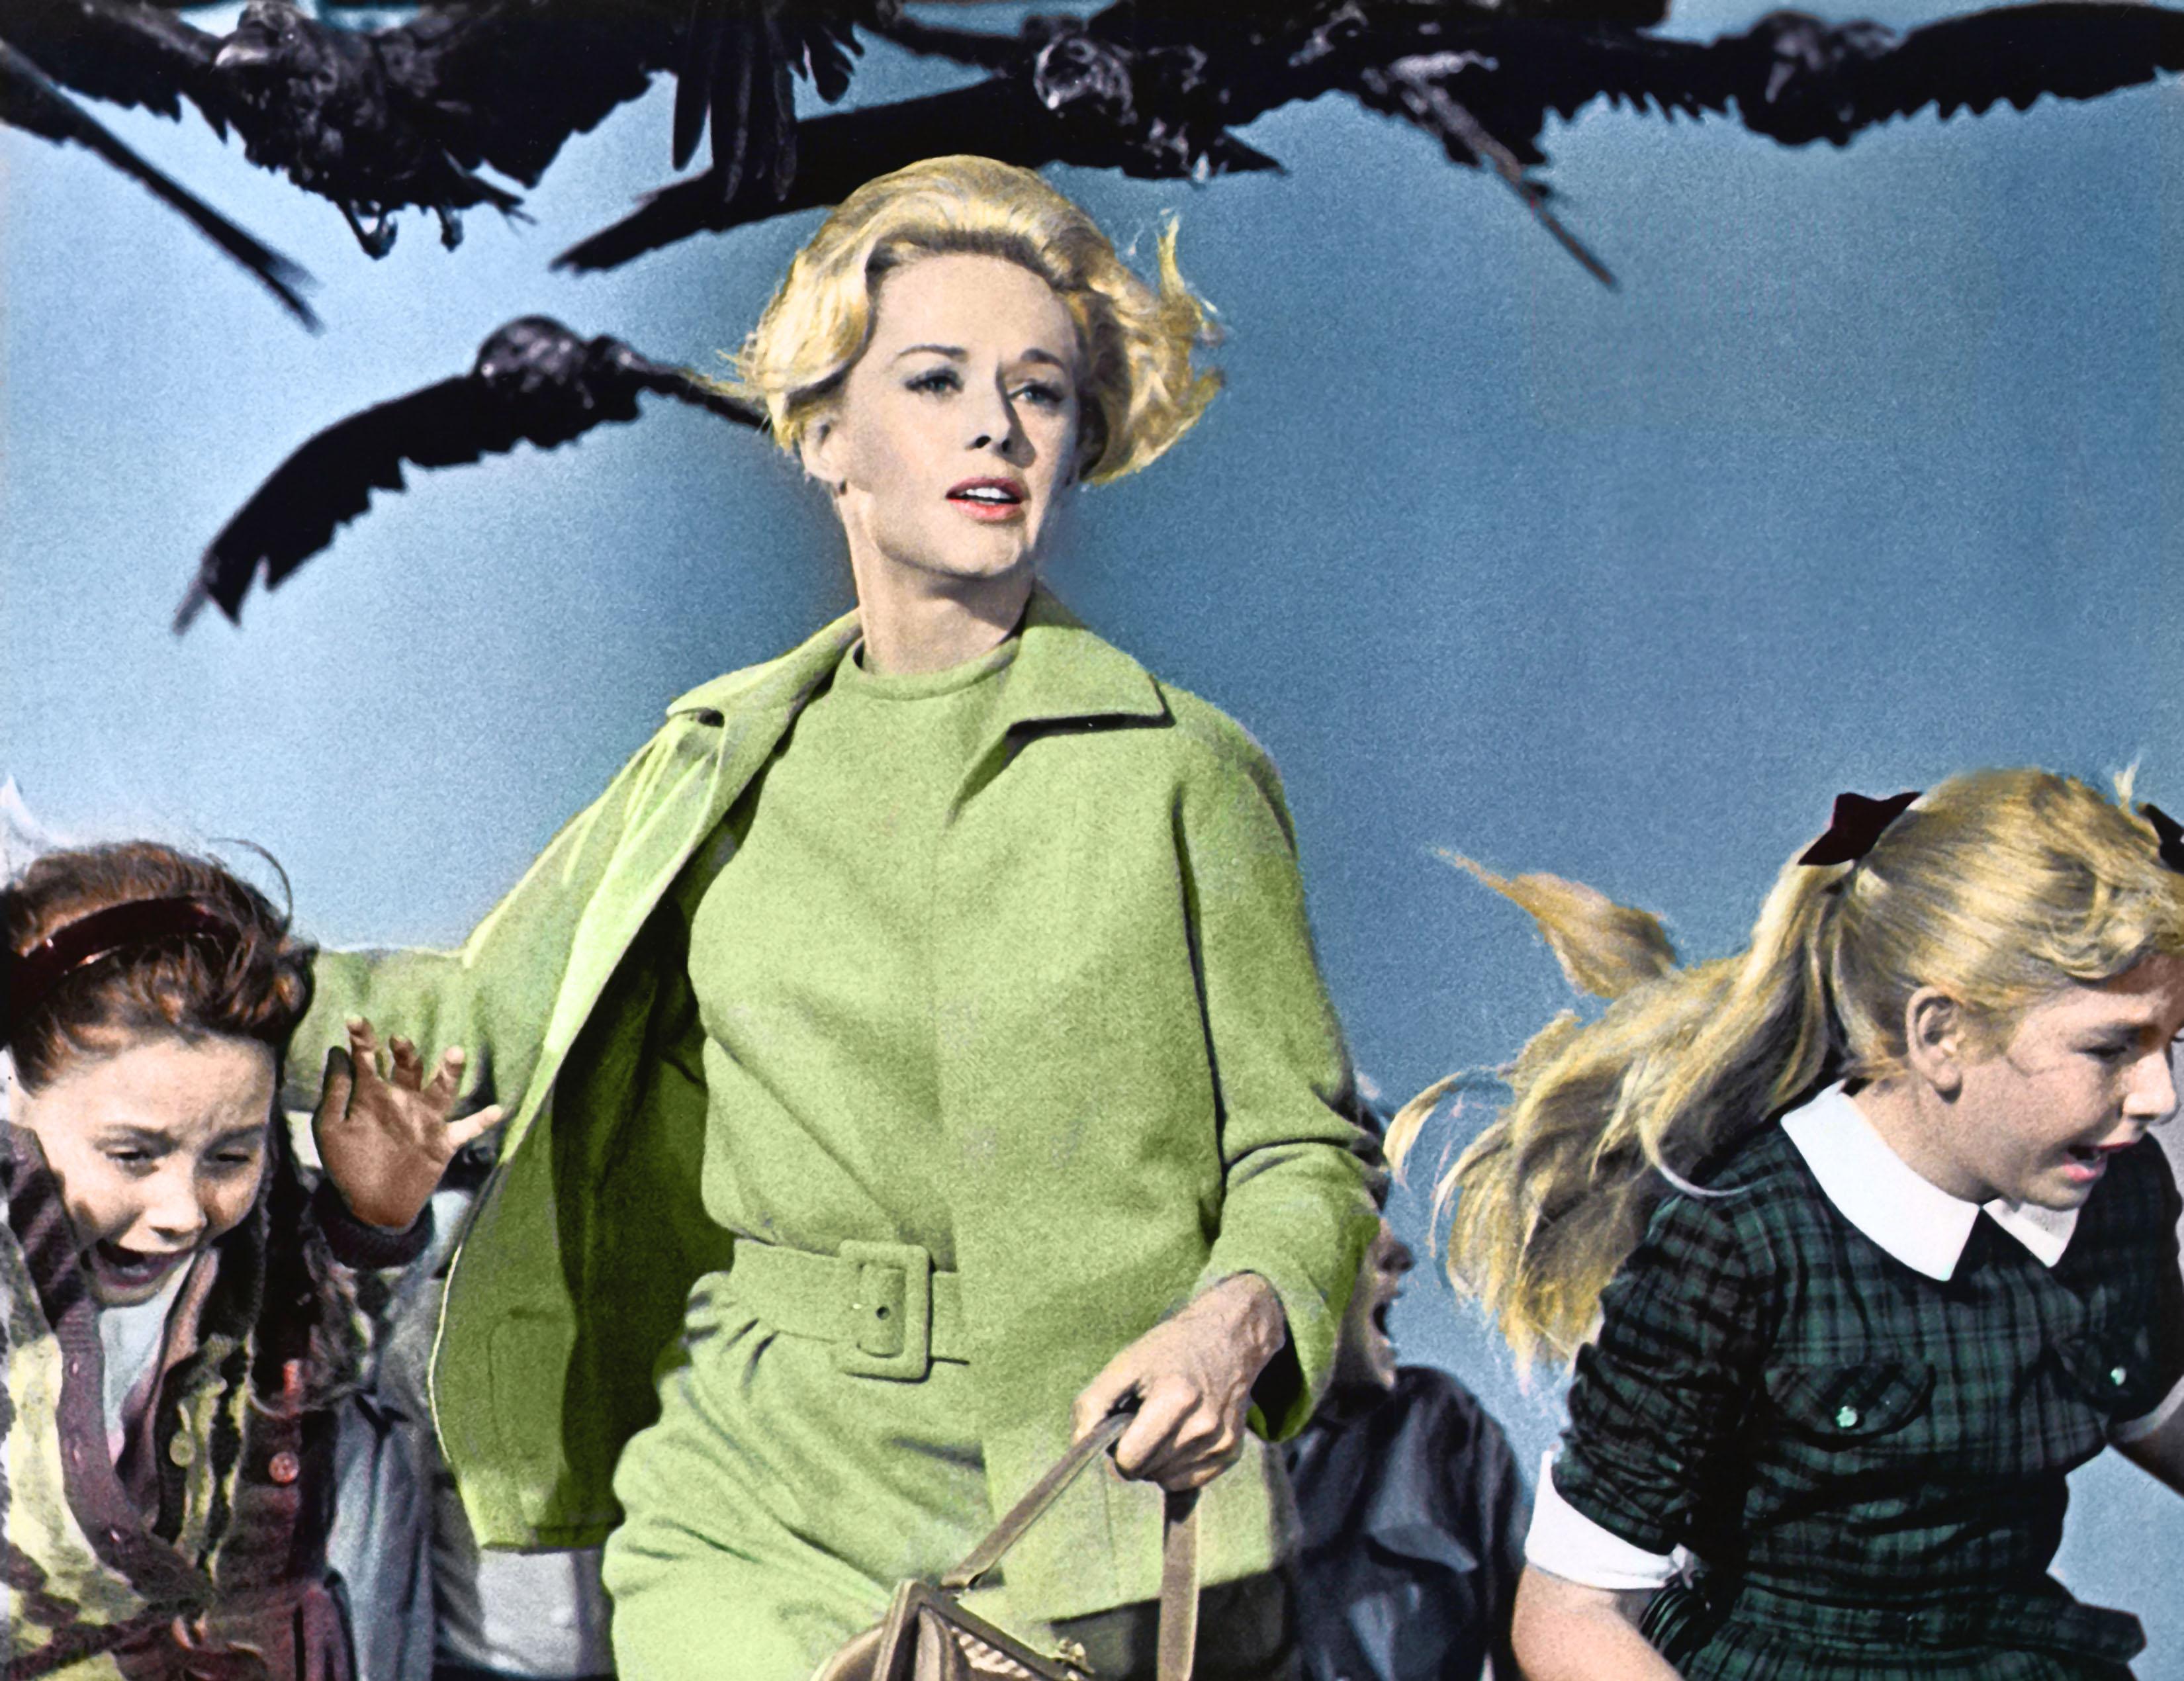 Image du film "Les Oiseaux" d'Alfred Hitchcock [Universal/The Kobal Collection]